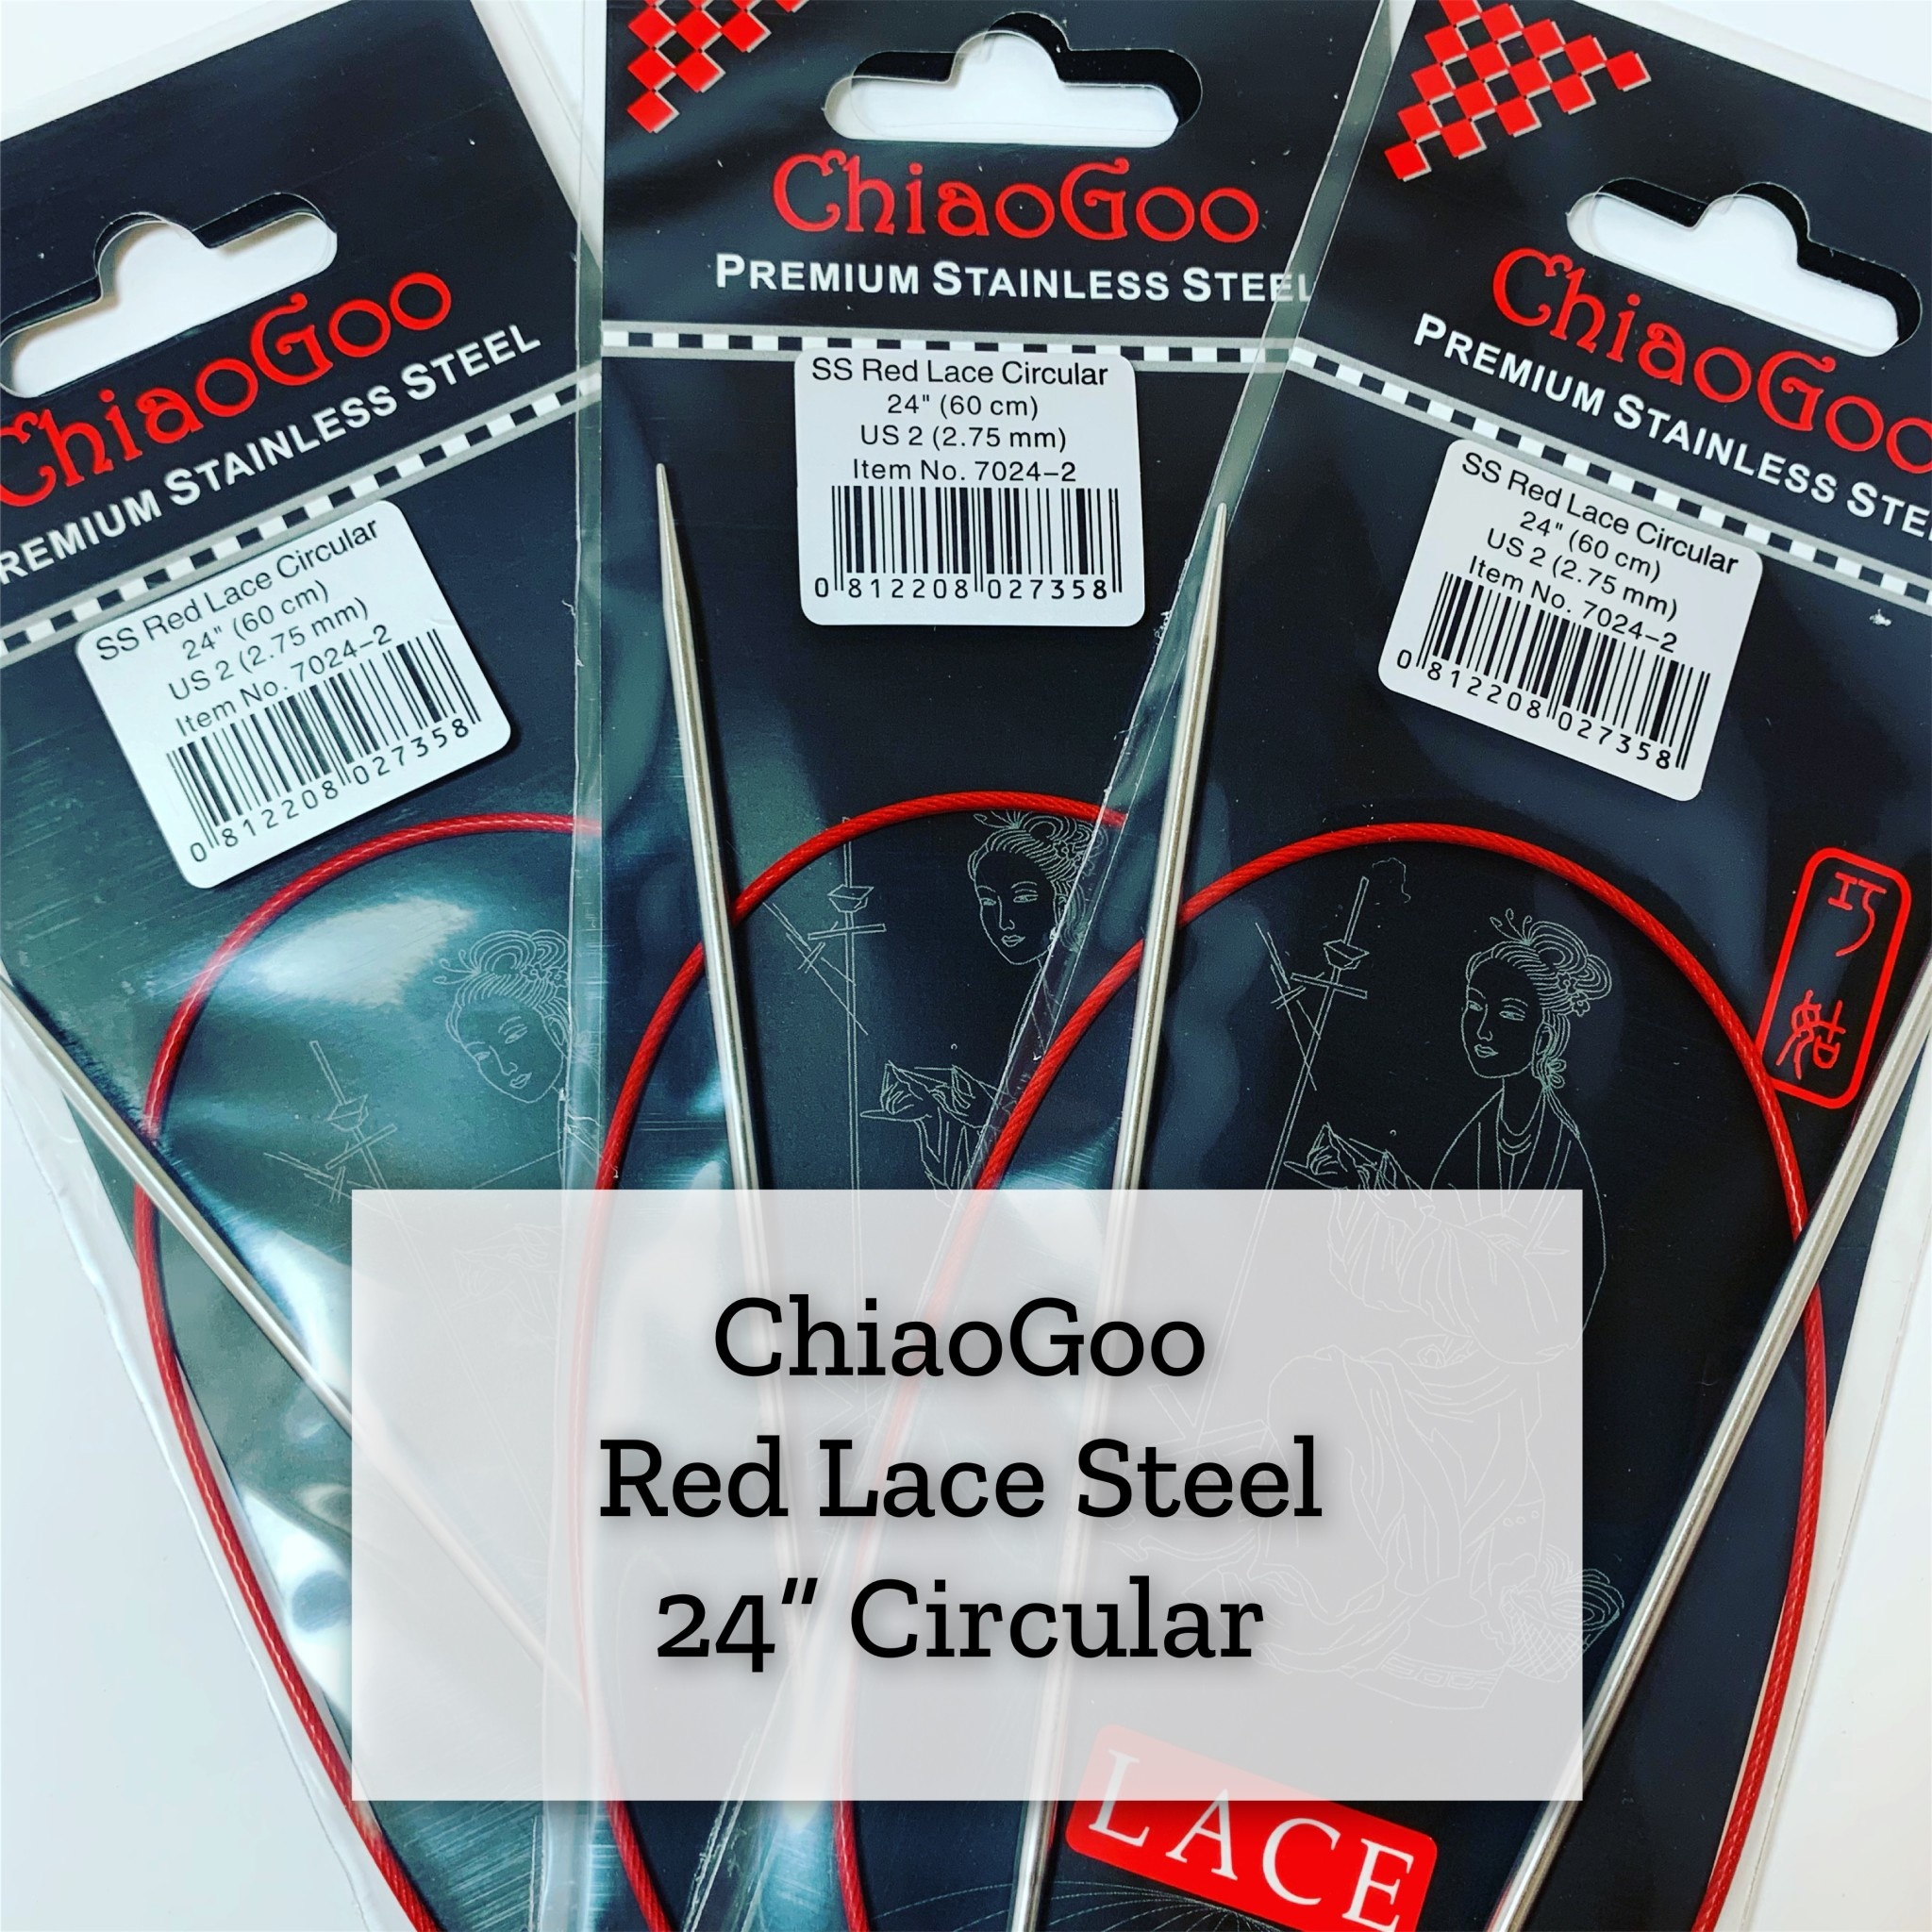 ChiaoGoo Red Lace Steel - 24" 4 mm